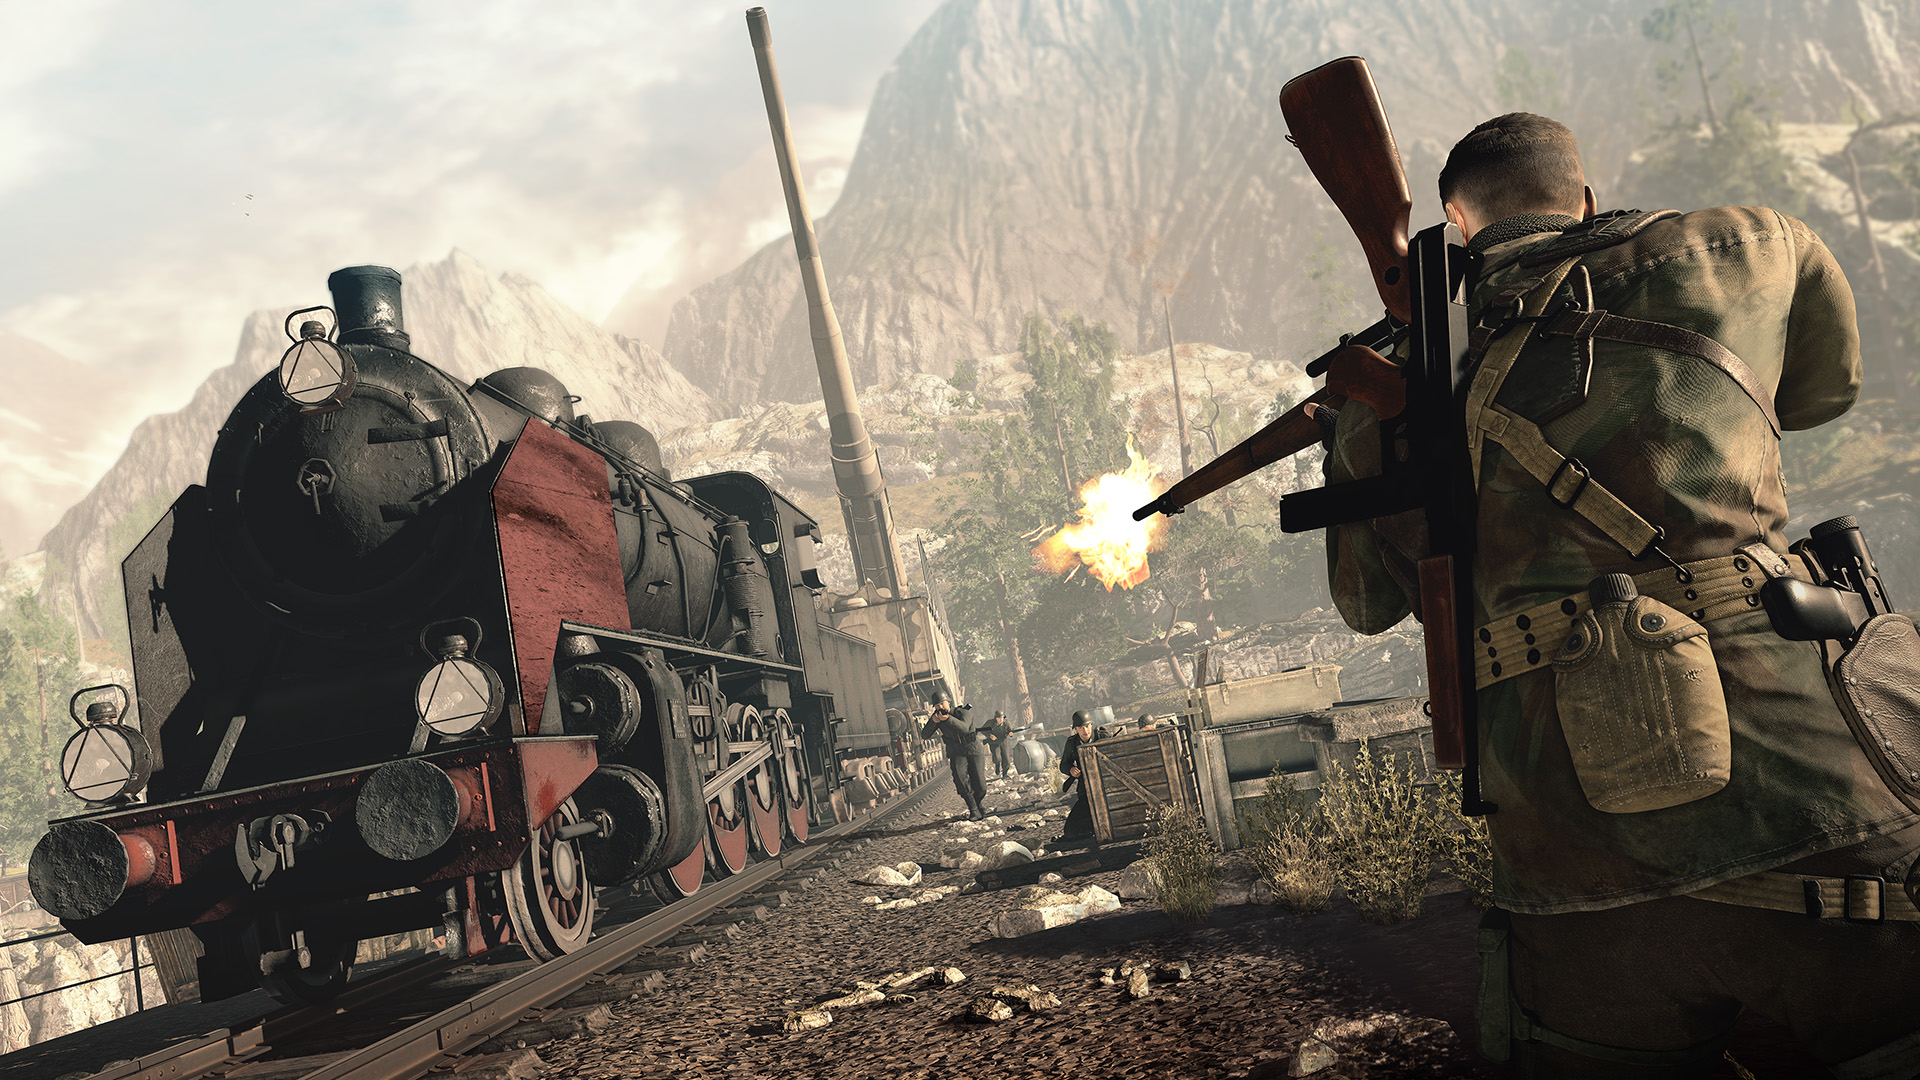 Save 90% on Sniper Elite 4 on Steam